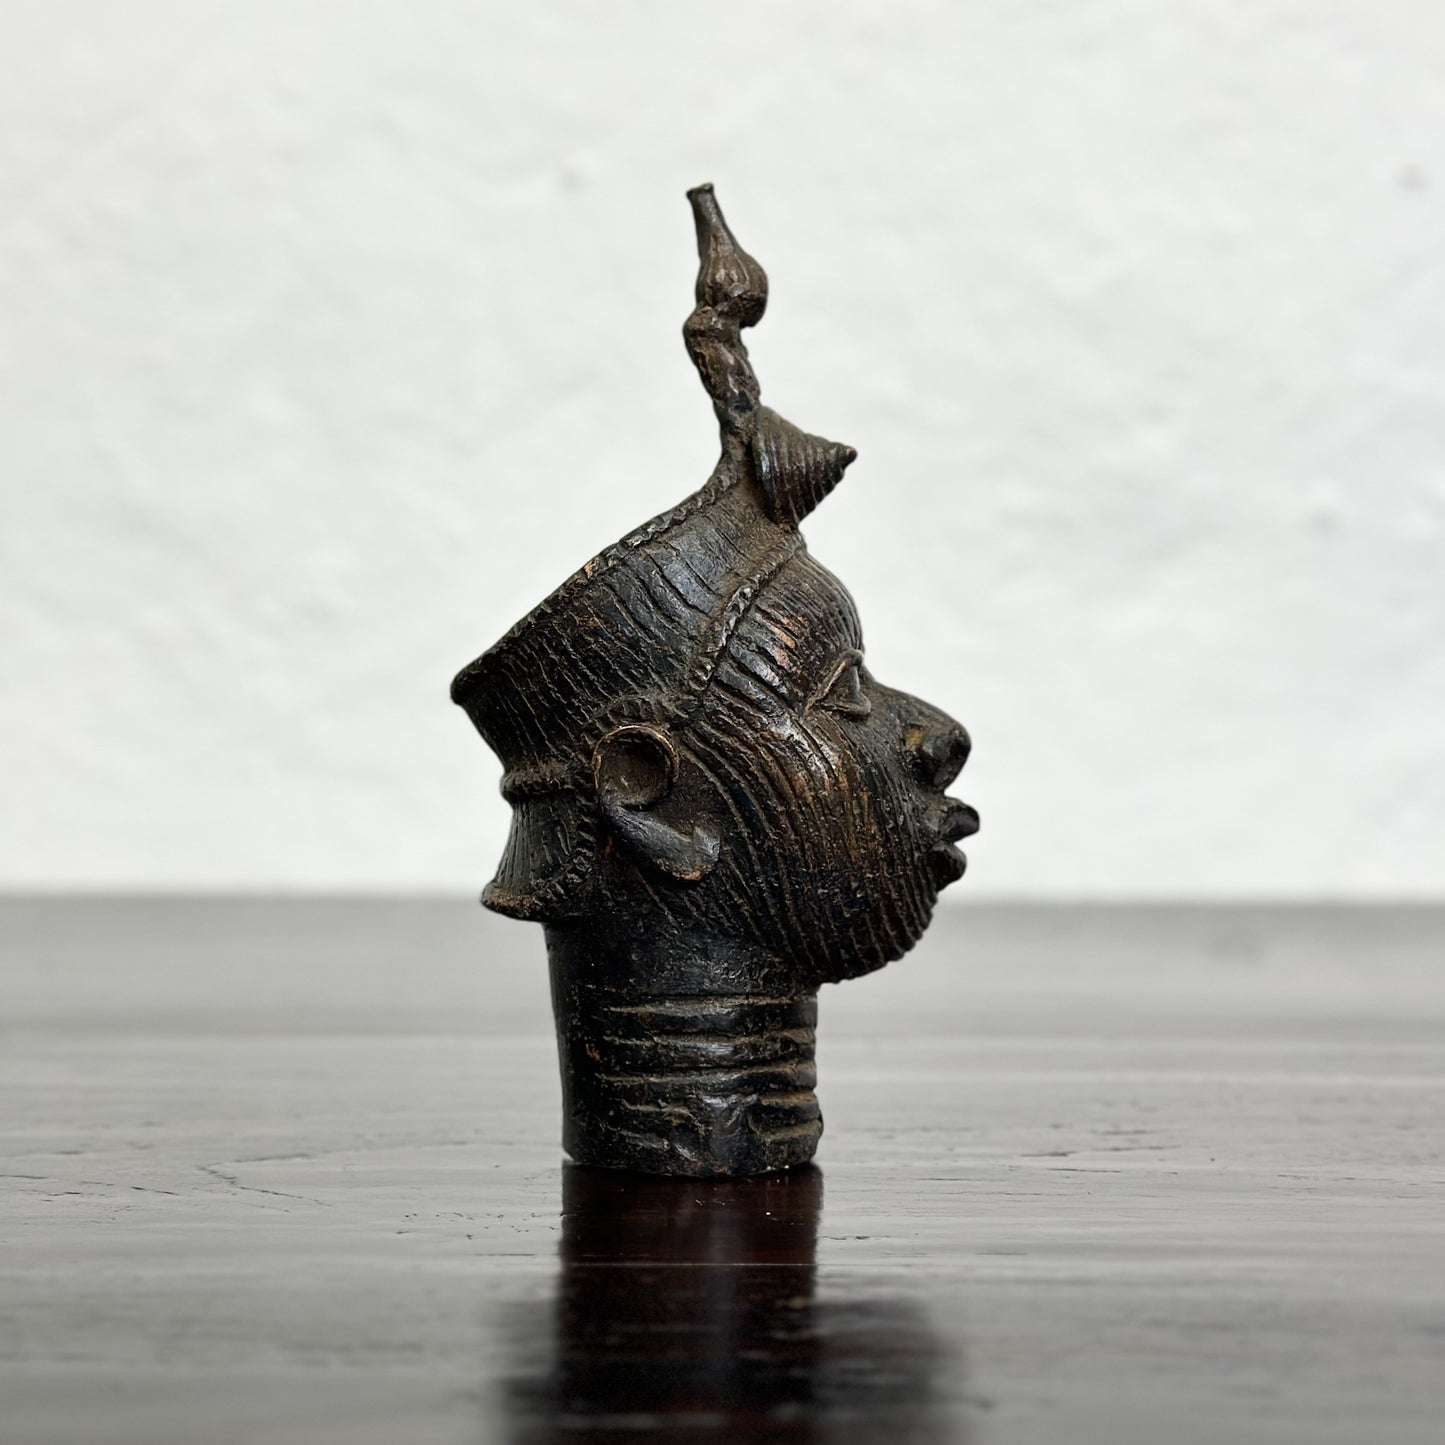 Ife Bronze Head Sculpture - Nigeria